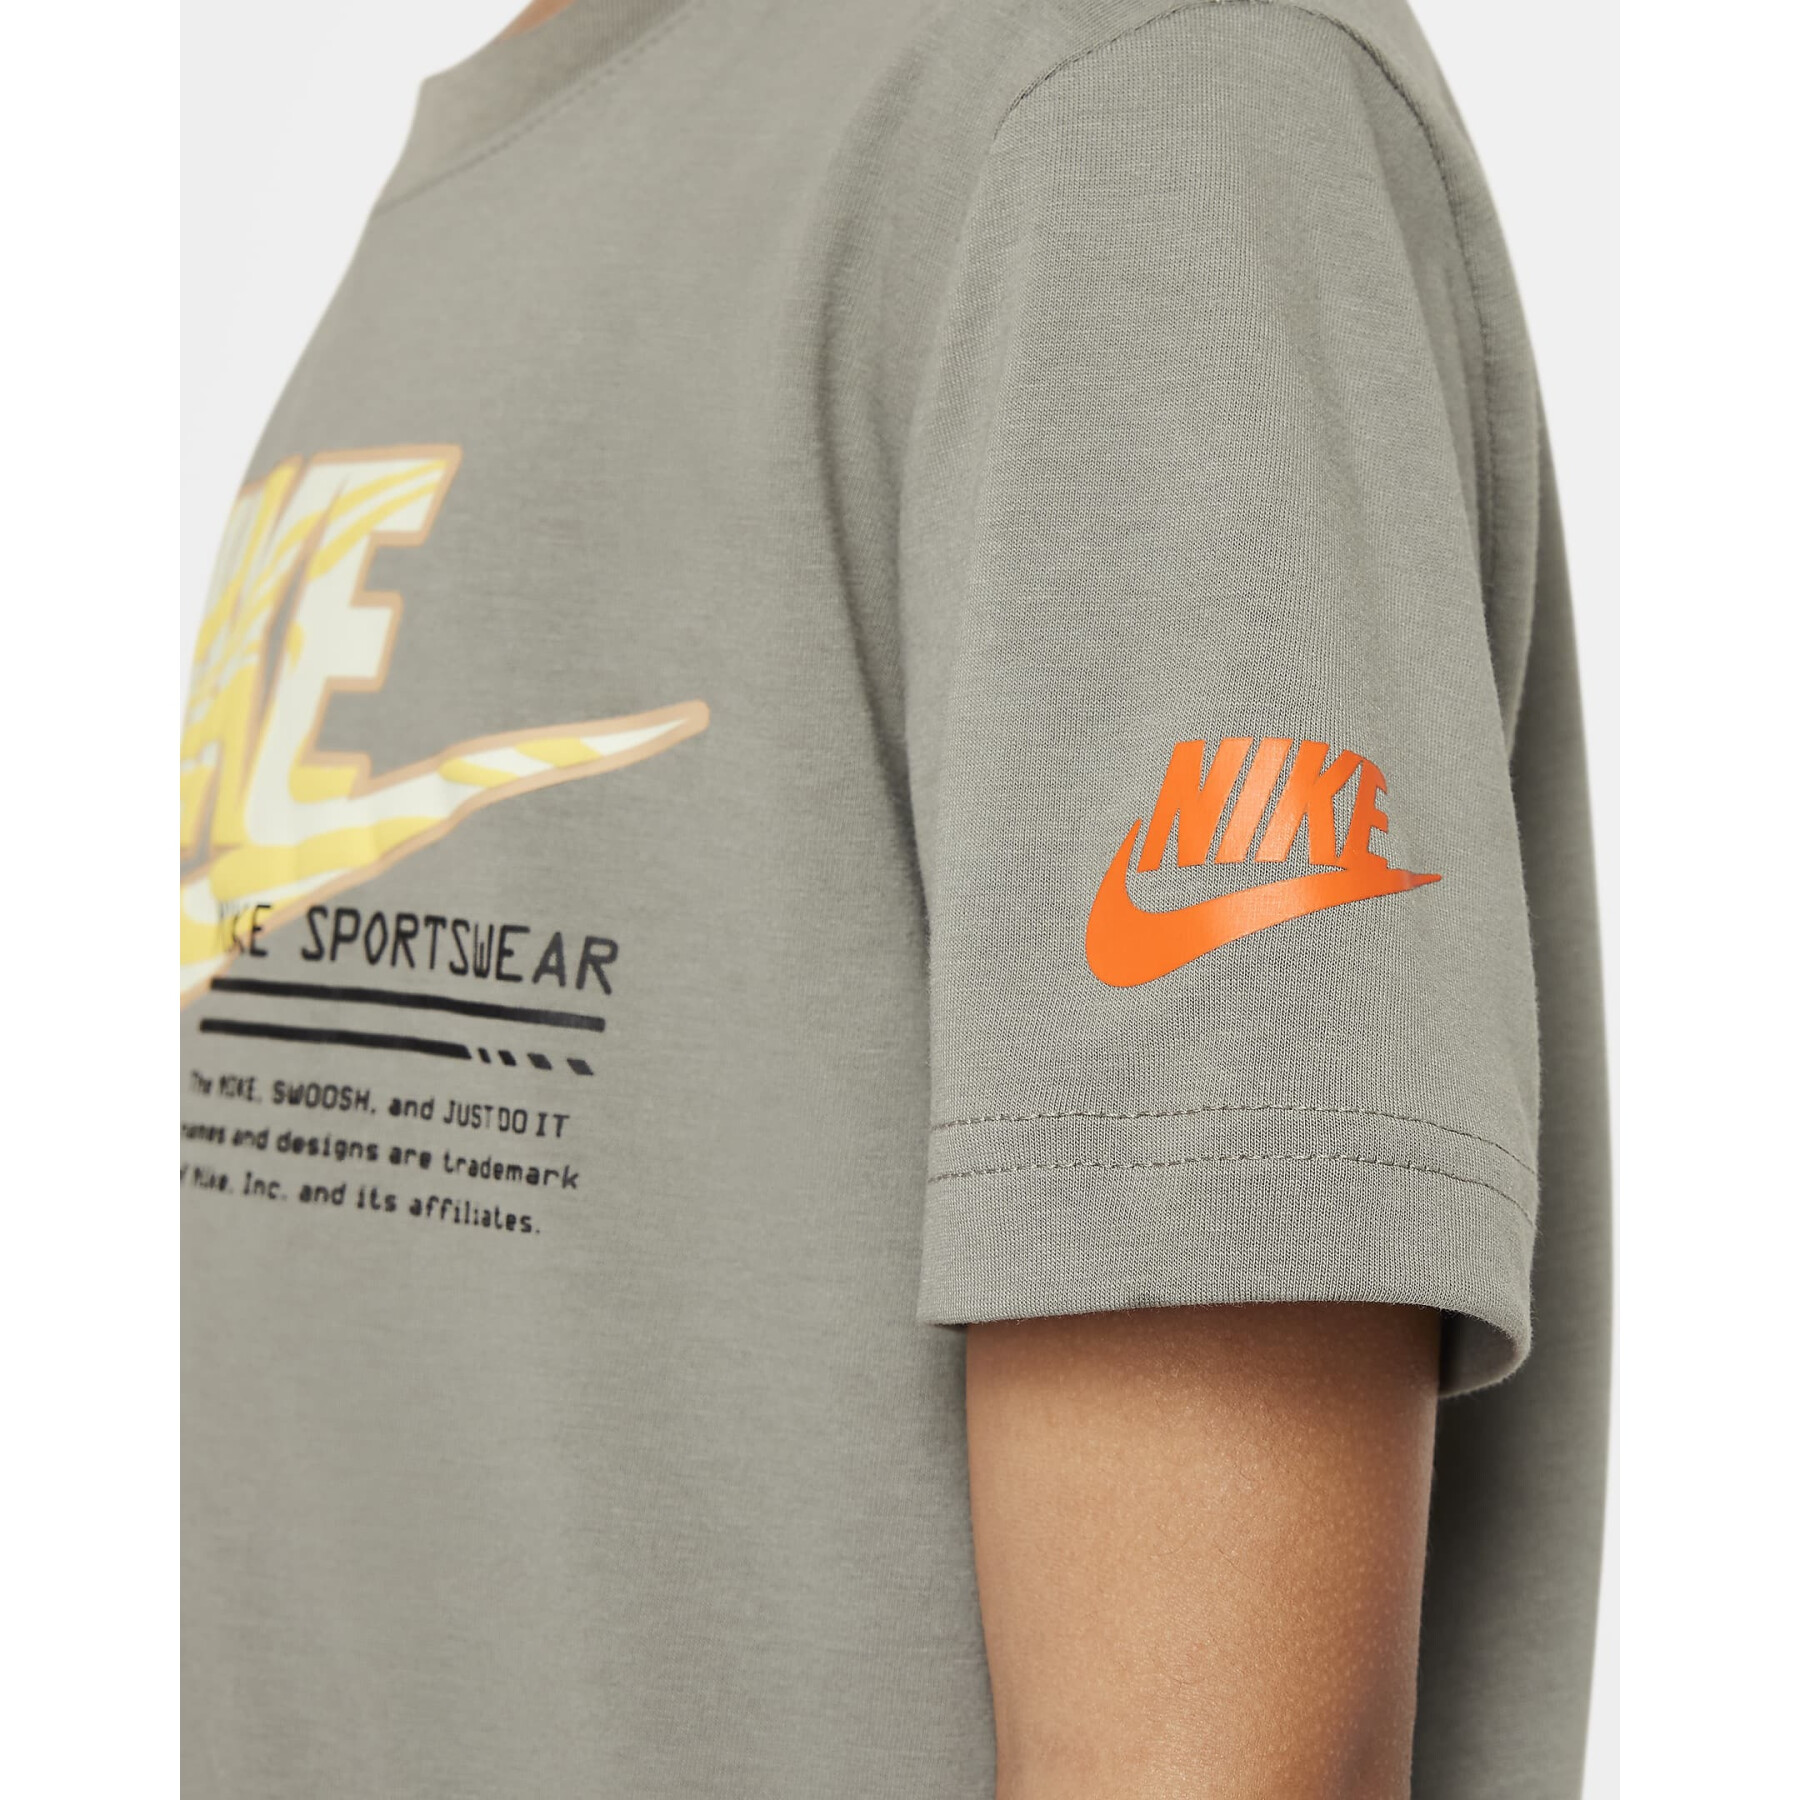 Child's T-shirt Nike Futura Micro Text